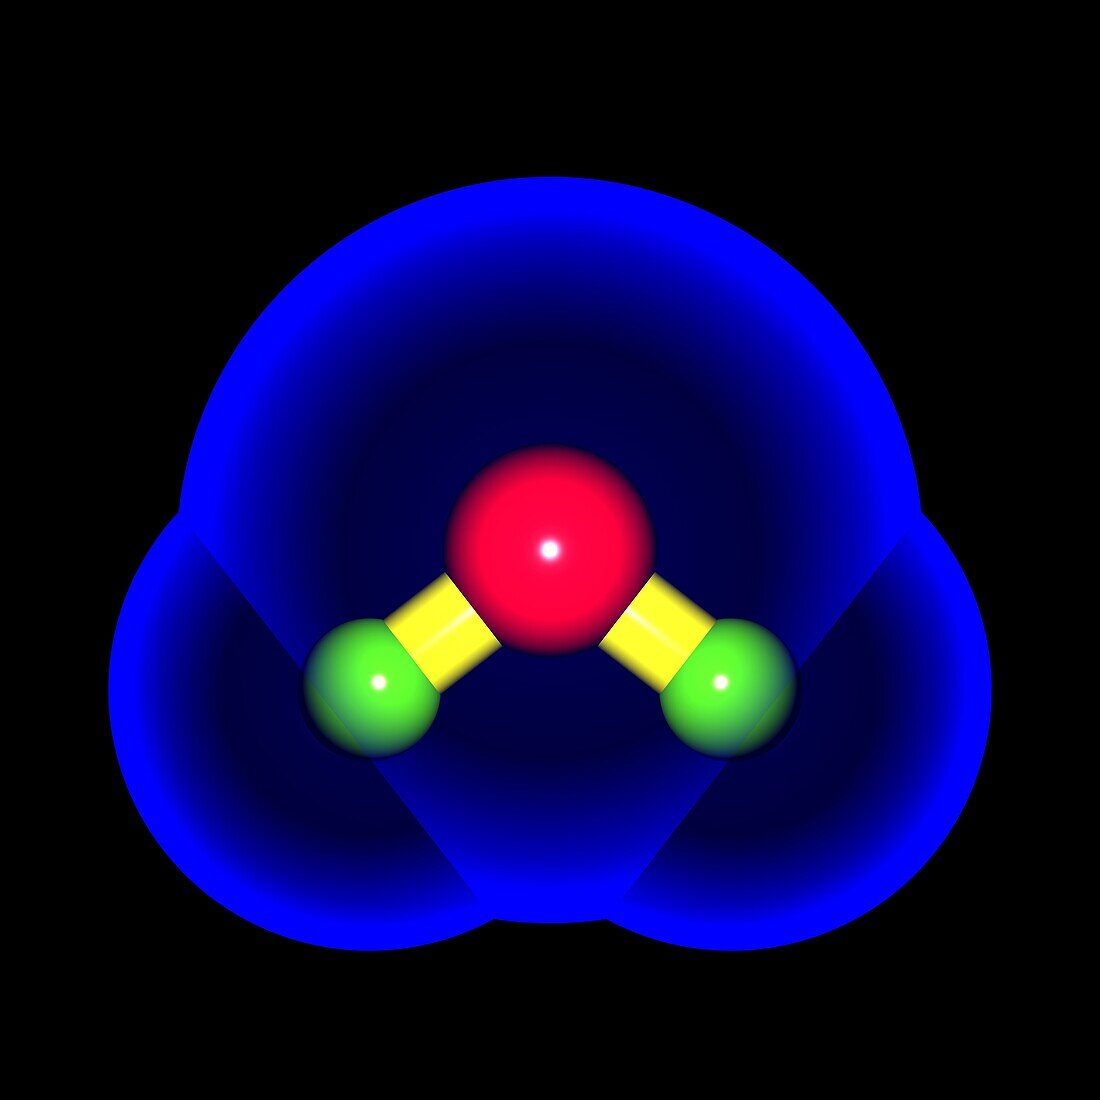 Water molecule, illustration